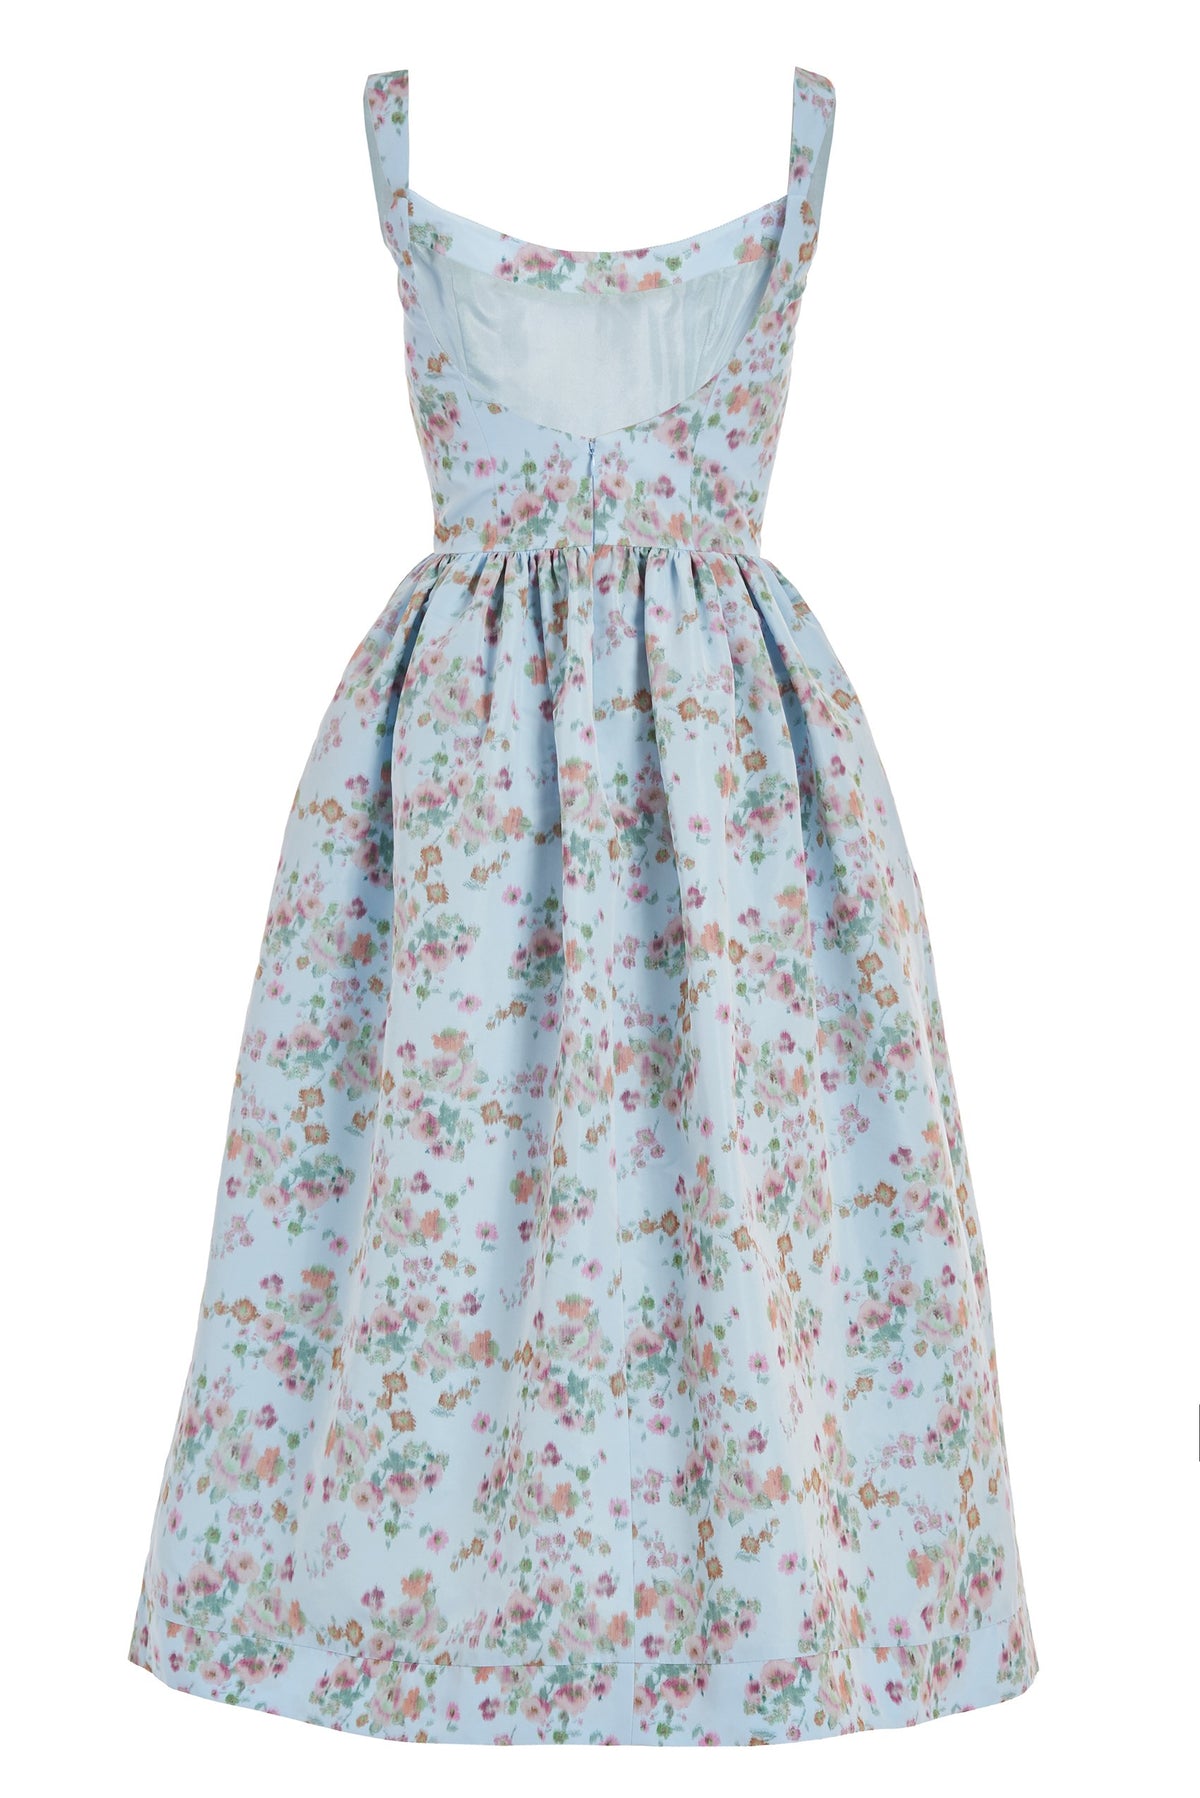 Apple Blue Ikat Floral Full Skirt Corset Dress